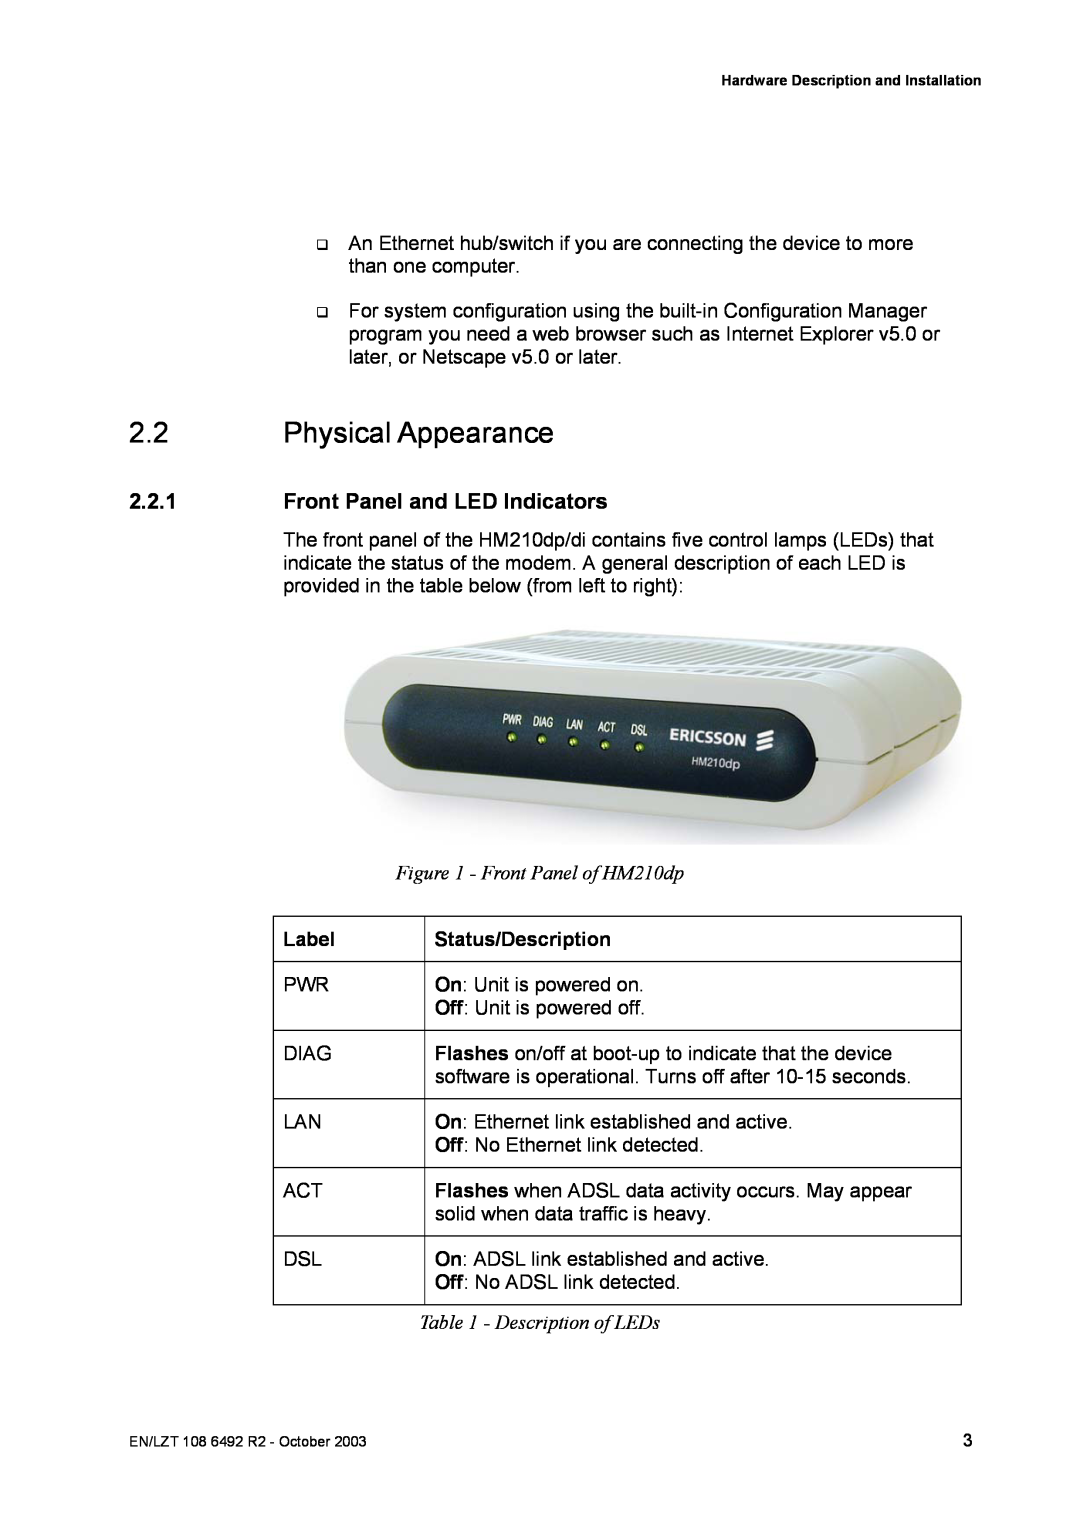 Garmin HM210DP/DI manual Physical Appearance, Front Panel and LED Indicators, Label, Status/Description 